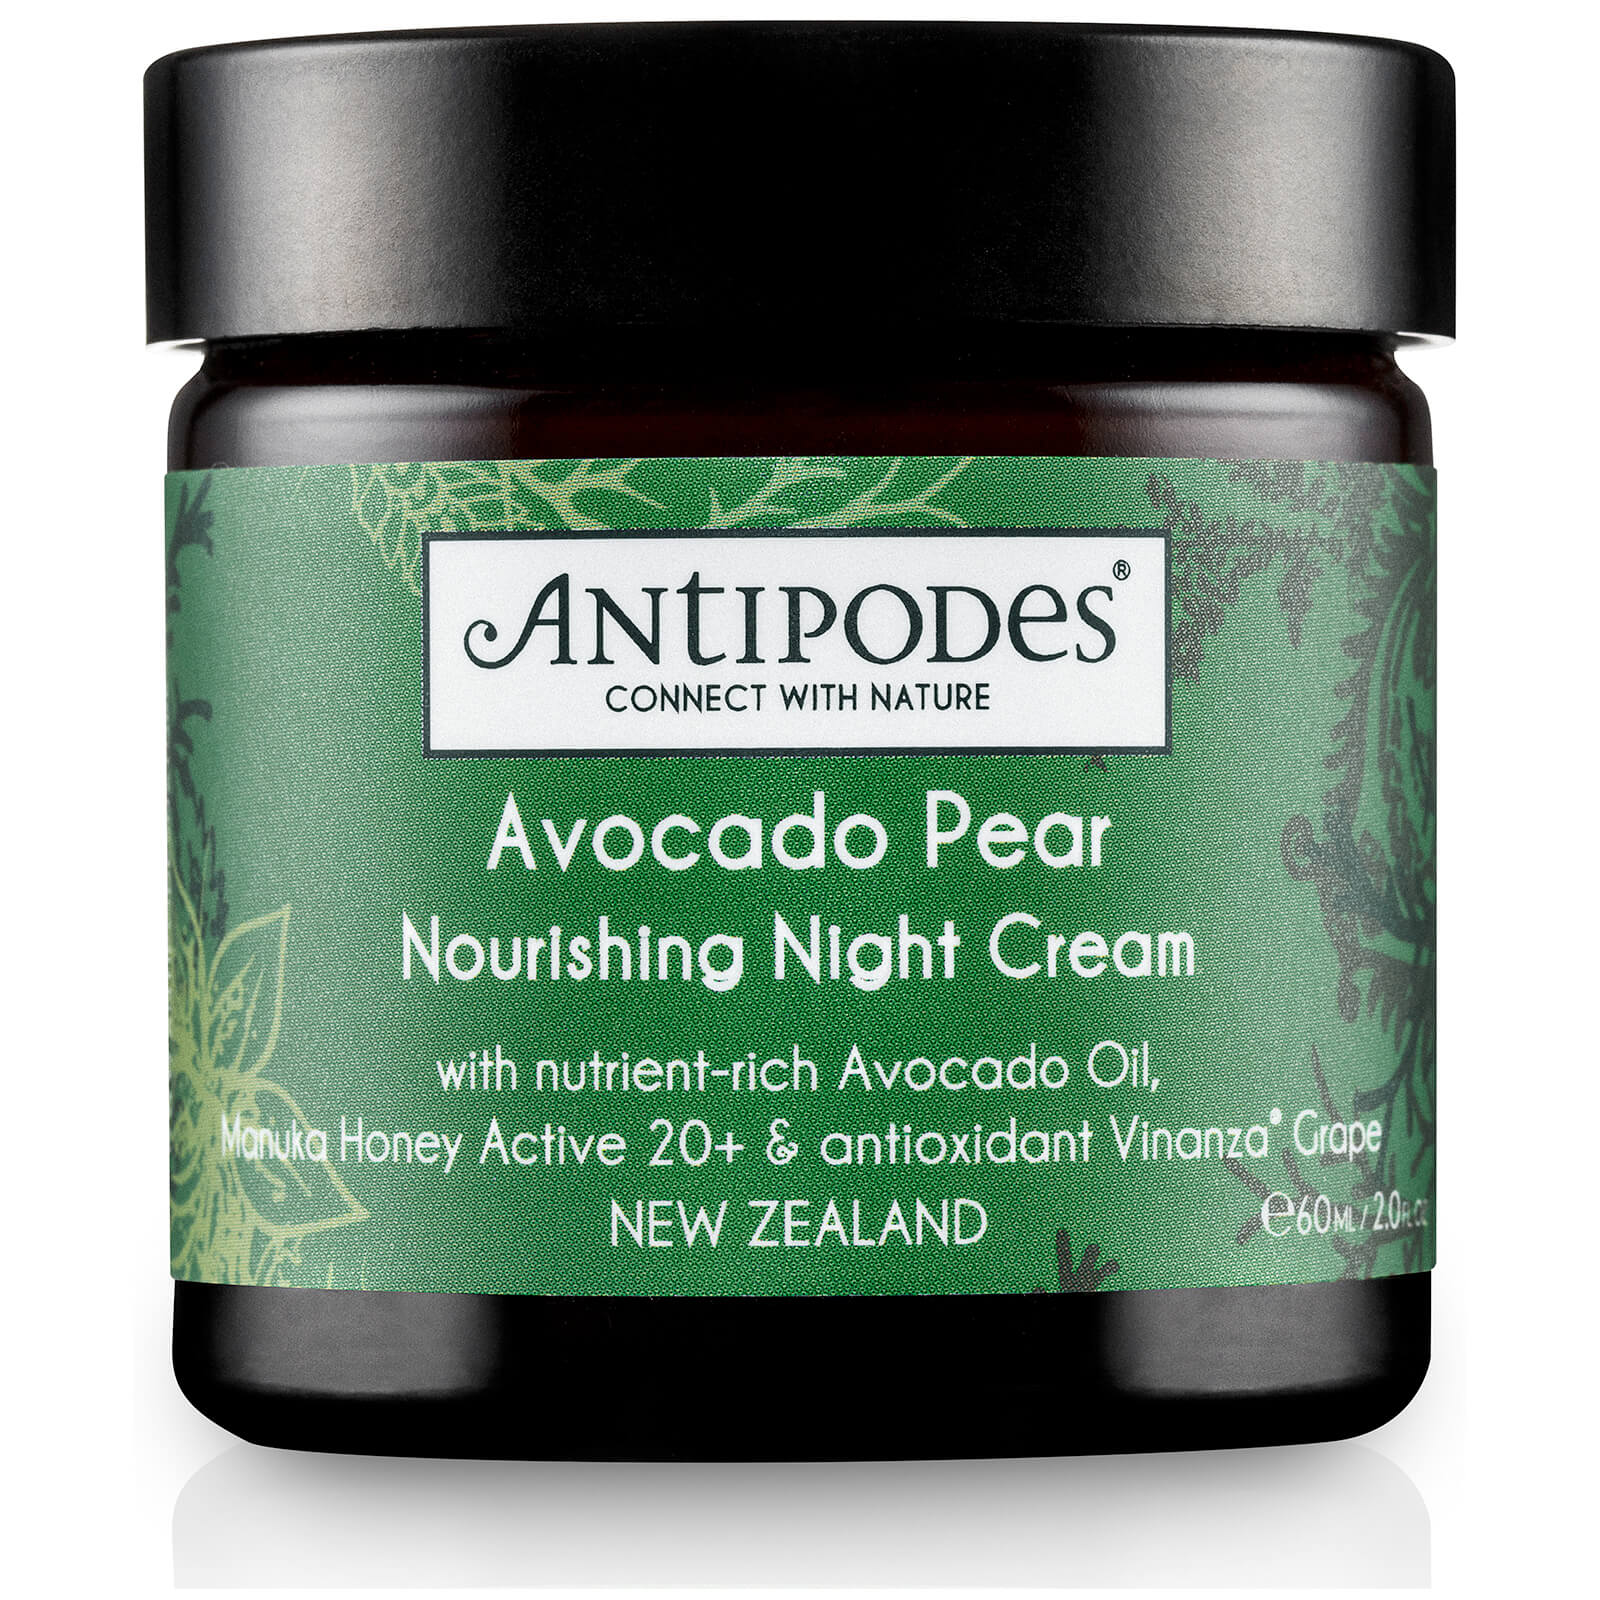 Antipodes Avocado Pear Nourishing Night Cream (60ml)